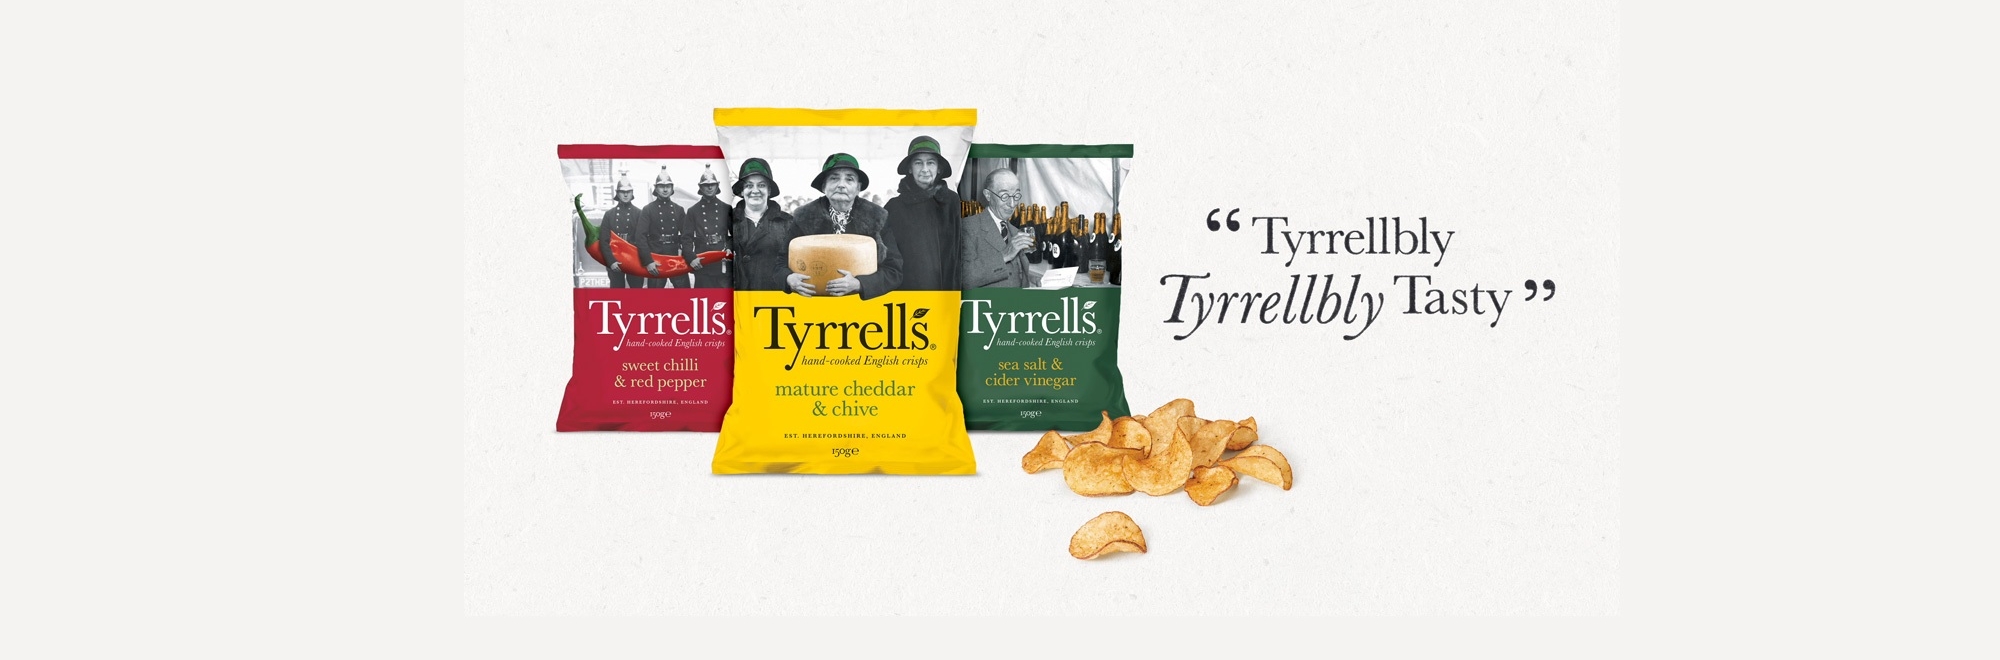 Tyrrells ‘Tyrrellbly tyrrellbly tasty’ campaign is back for Easter